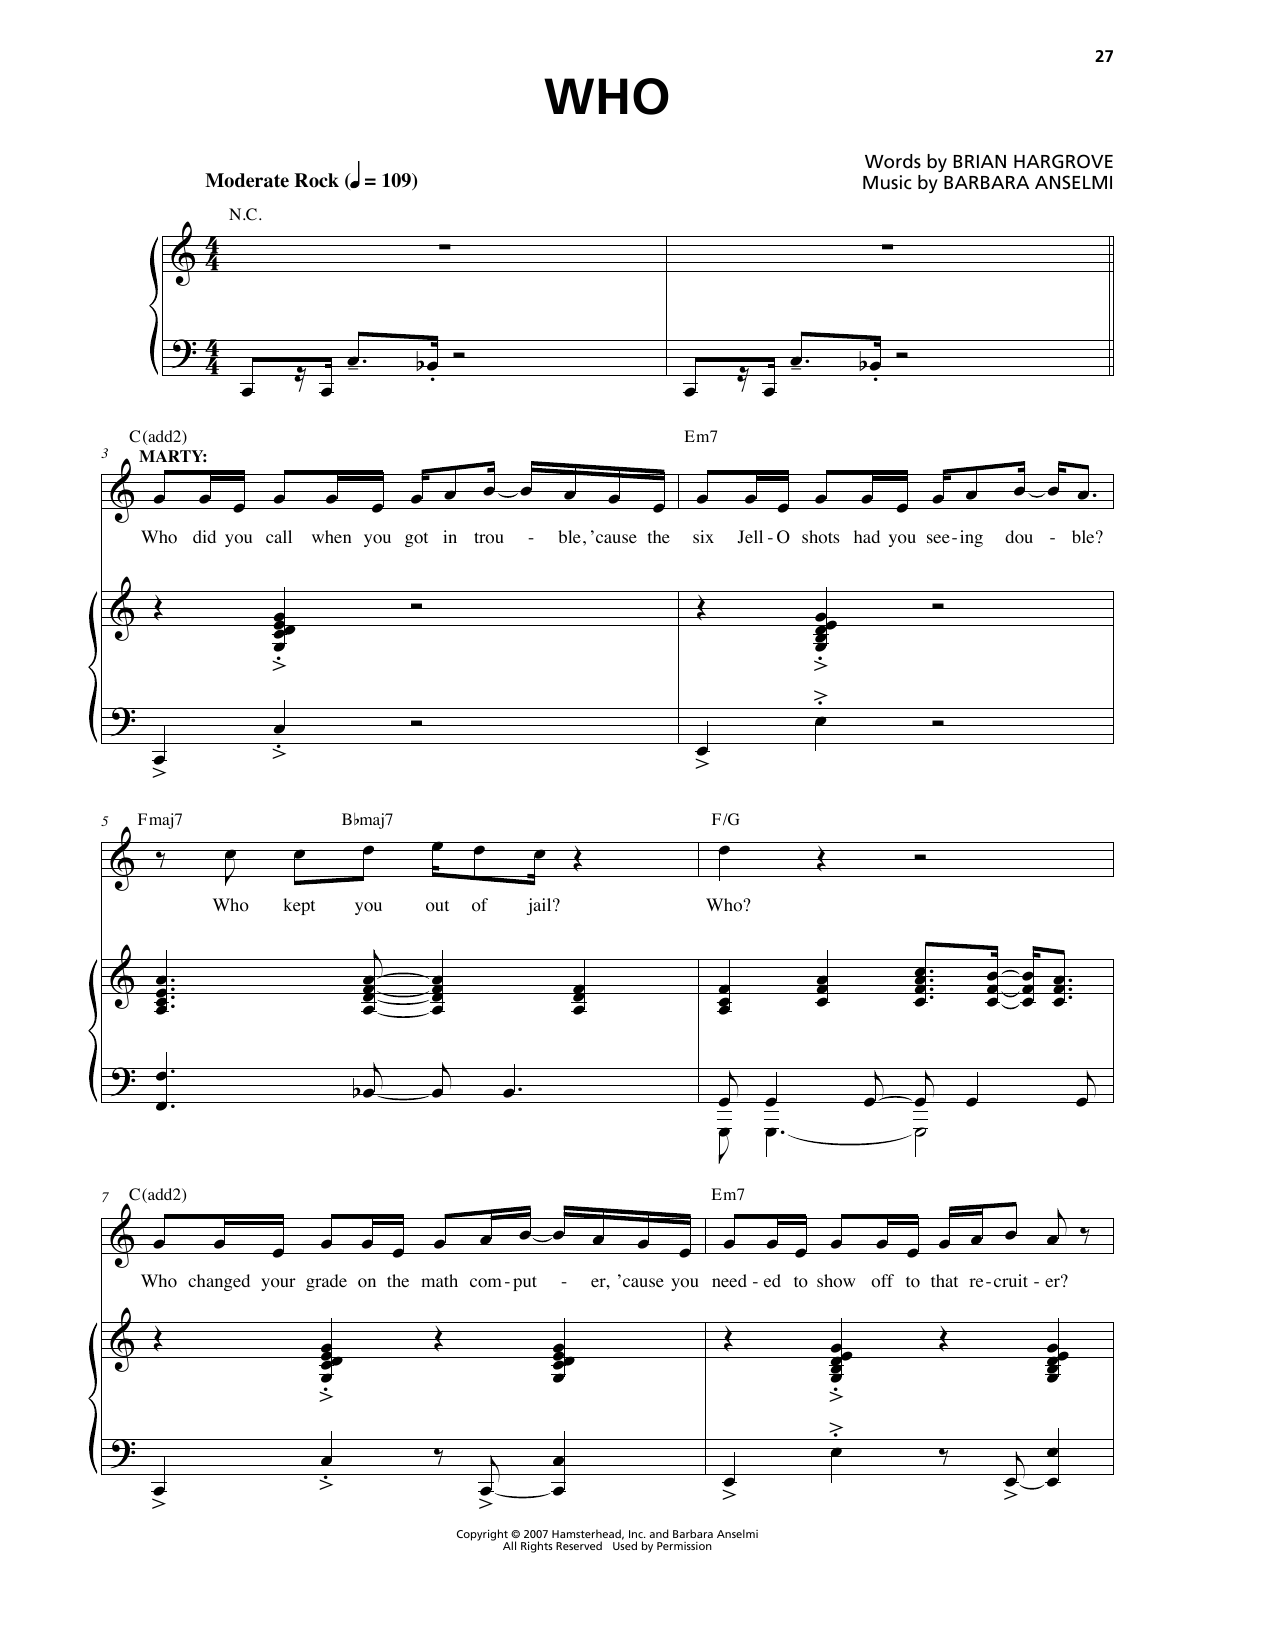 Barbara Anselmi & Brian Hargrove Who Sheet Music Notes & Chords for Piano & Vocal - Download or Print PDF